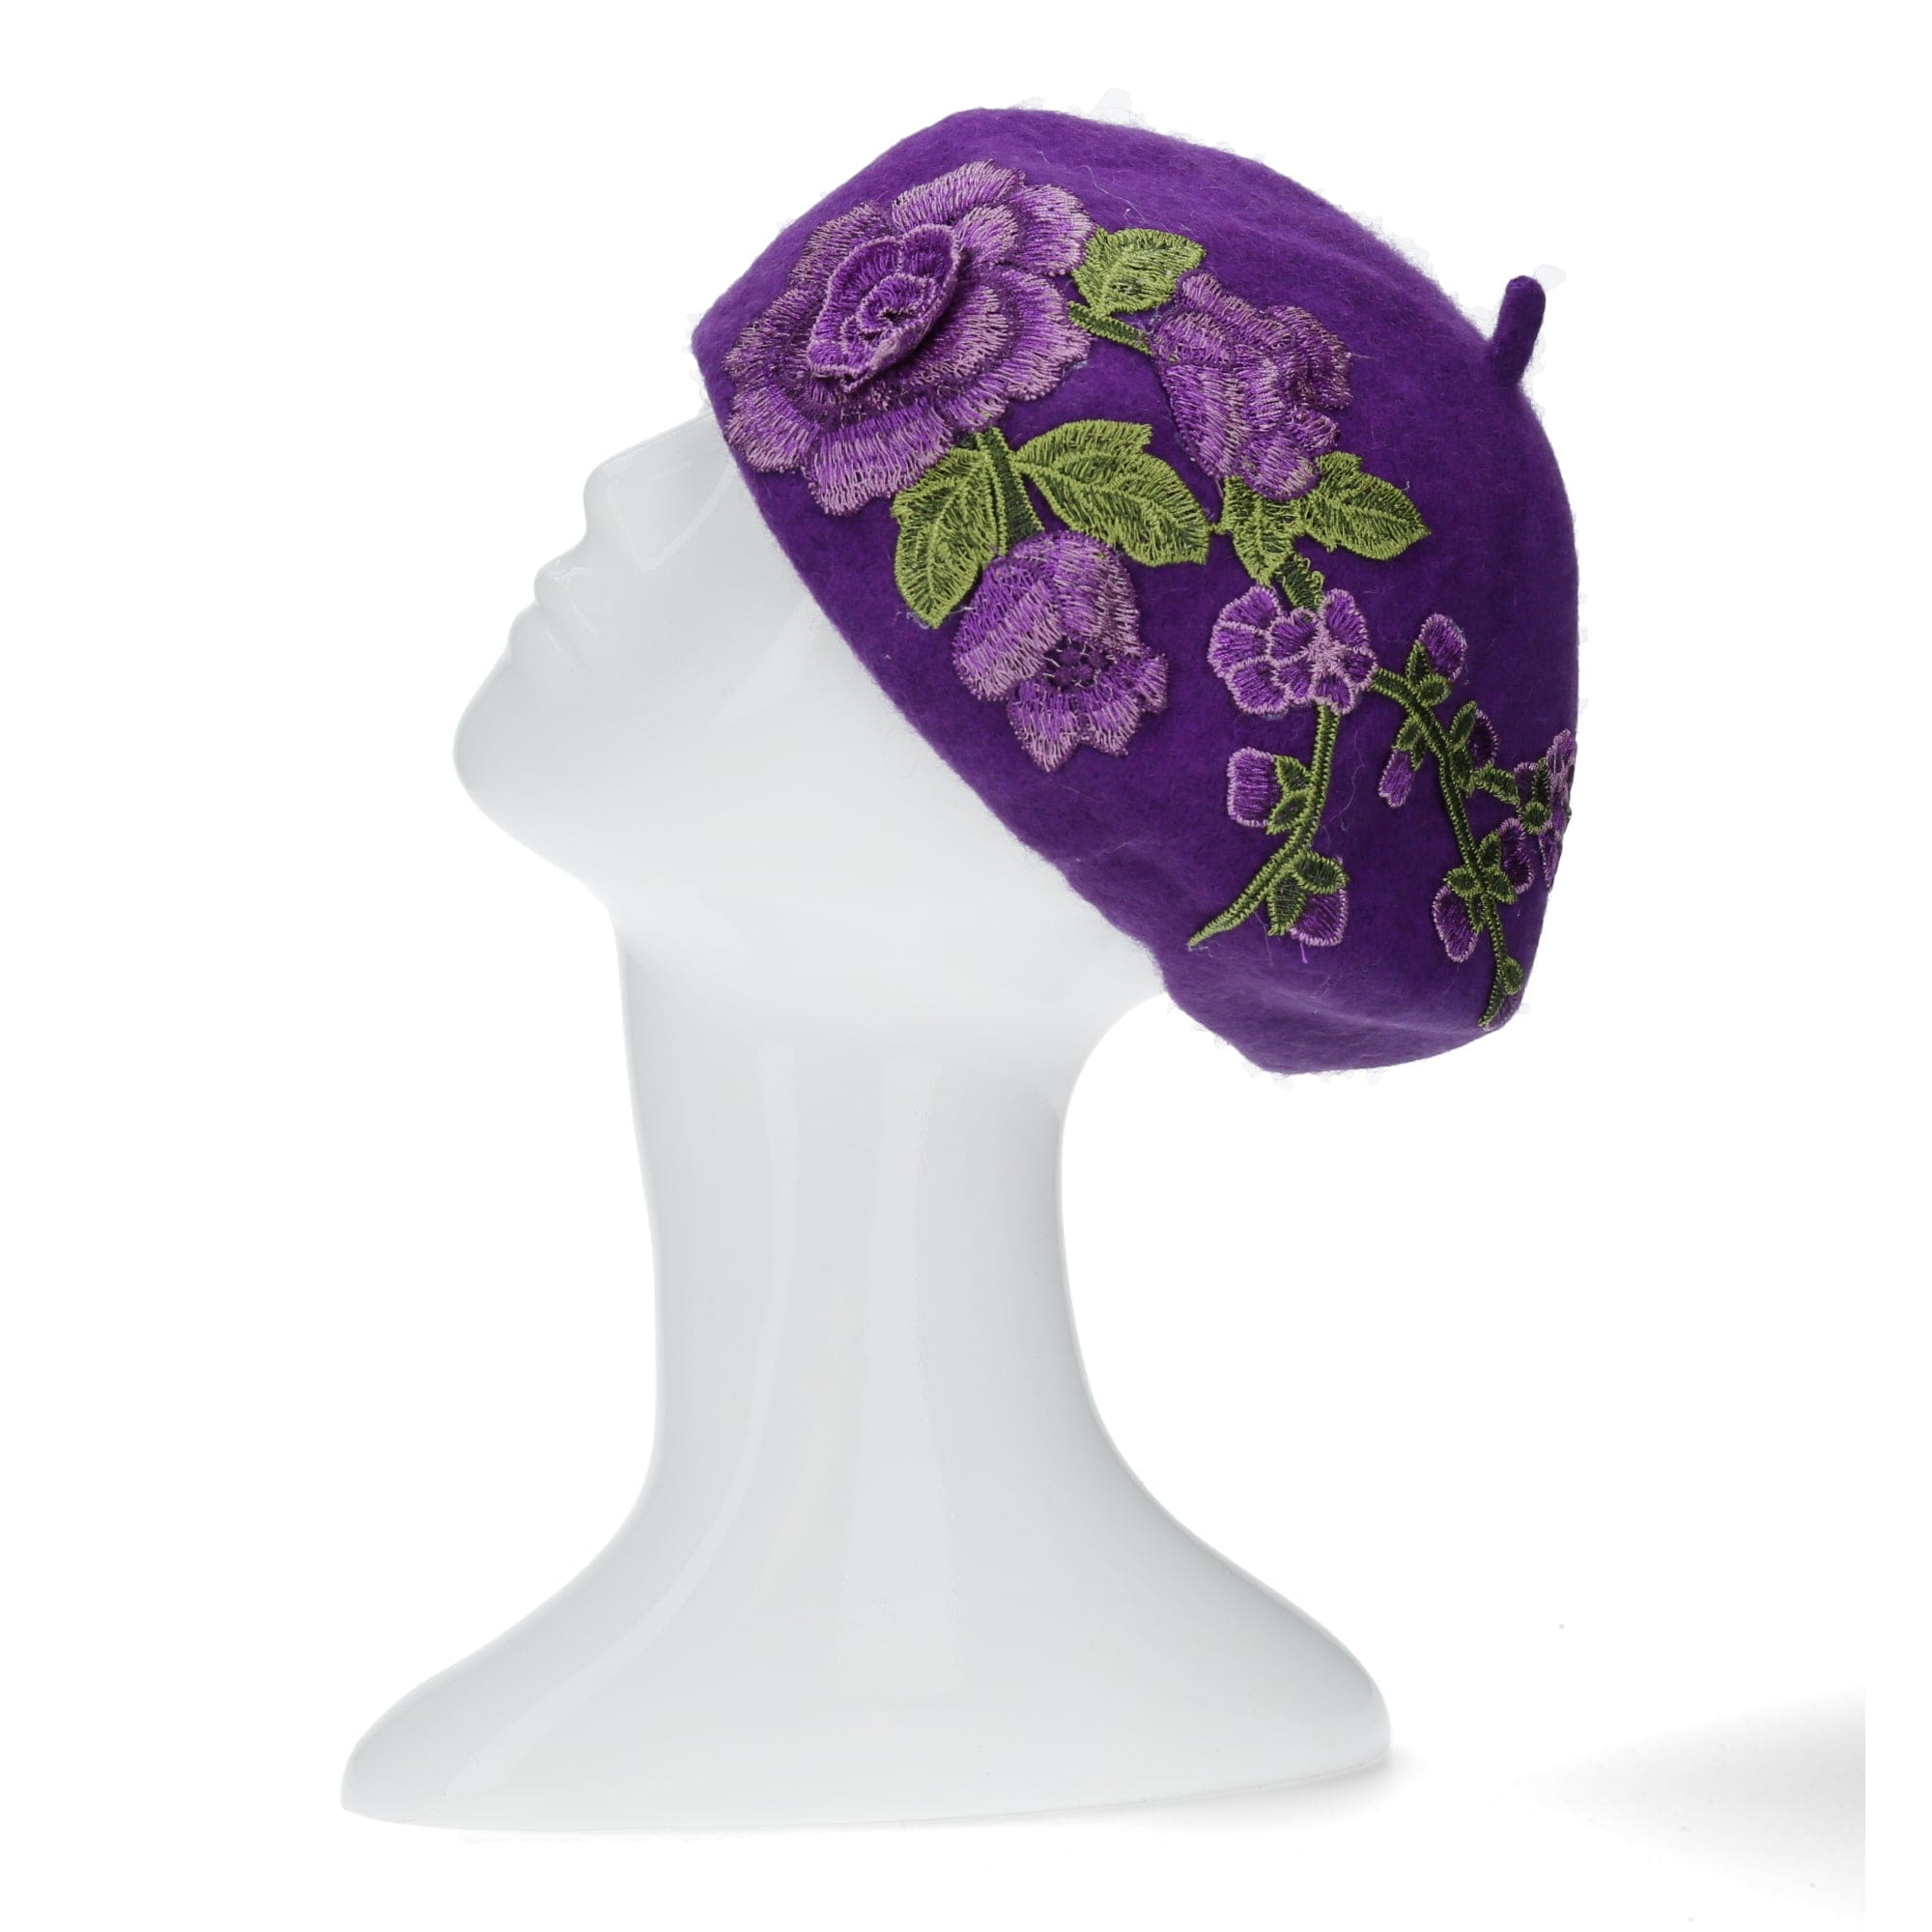 Emylle geblümte Baskenmütze - Violett Hüte